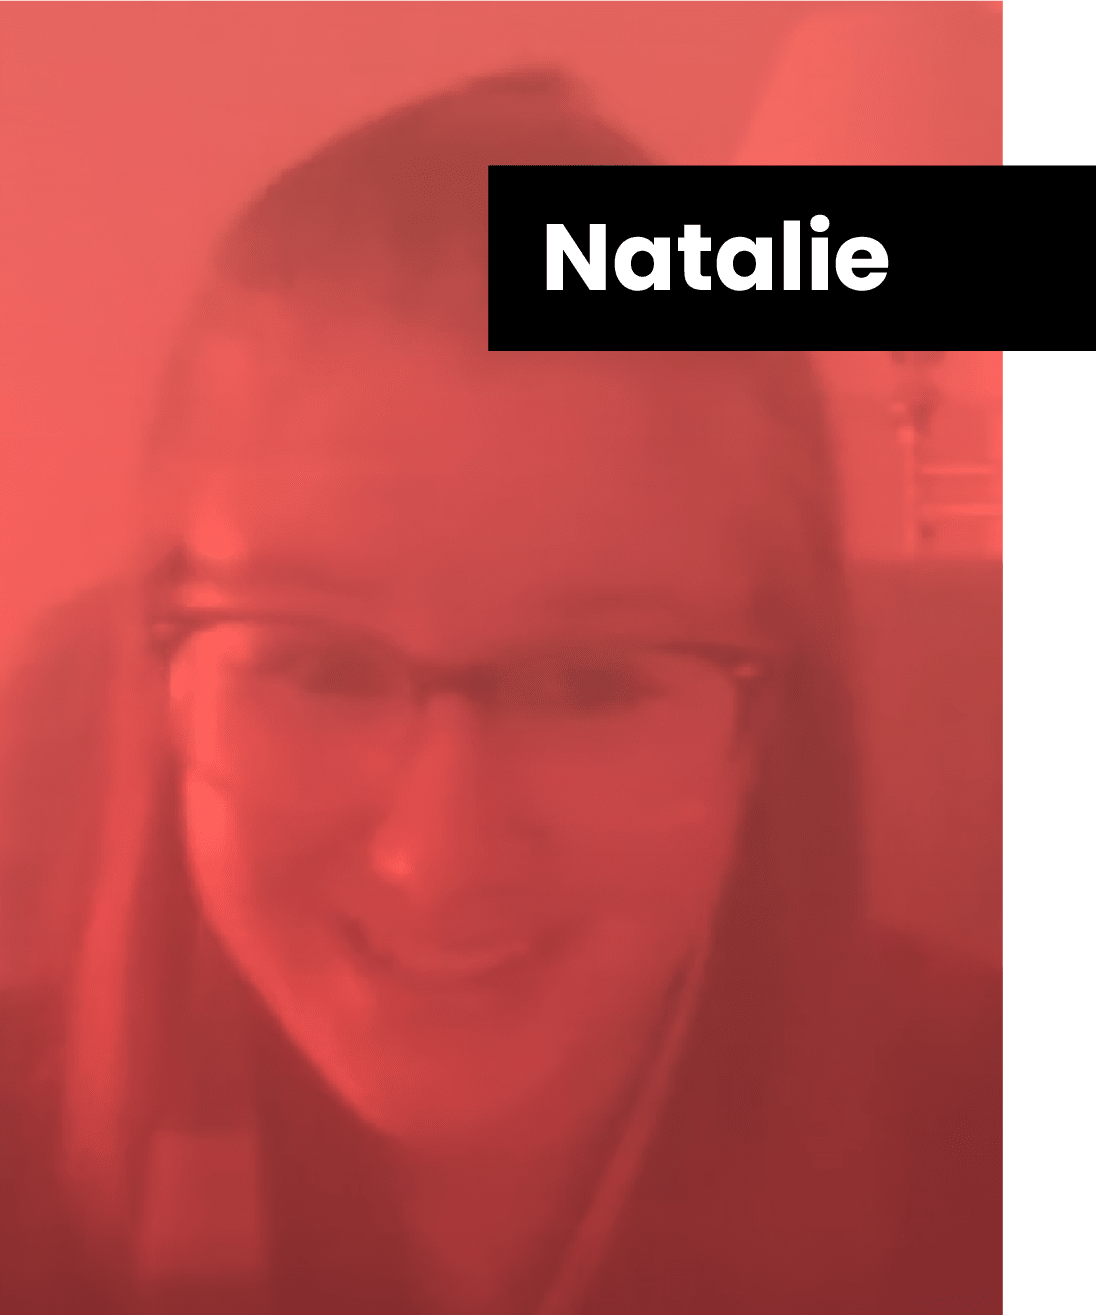 Natalie, the grade upgrader